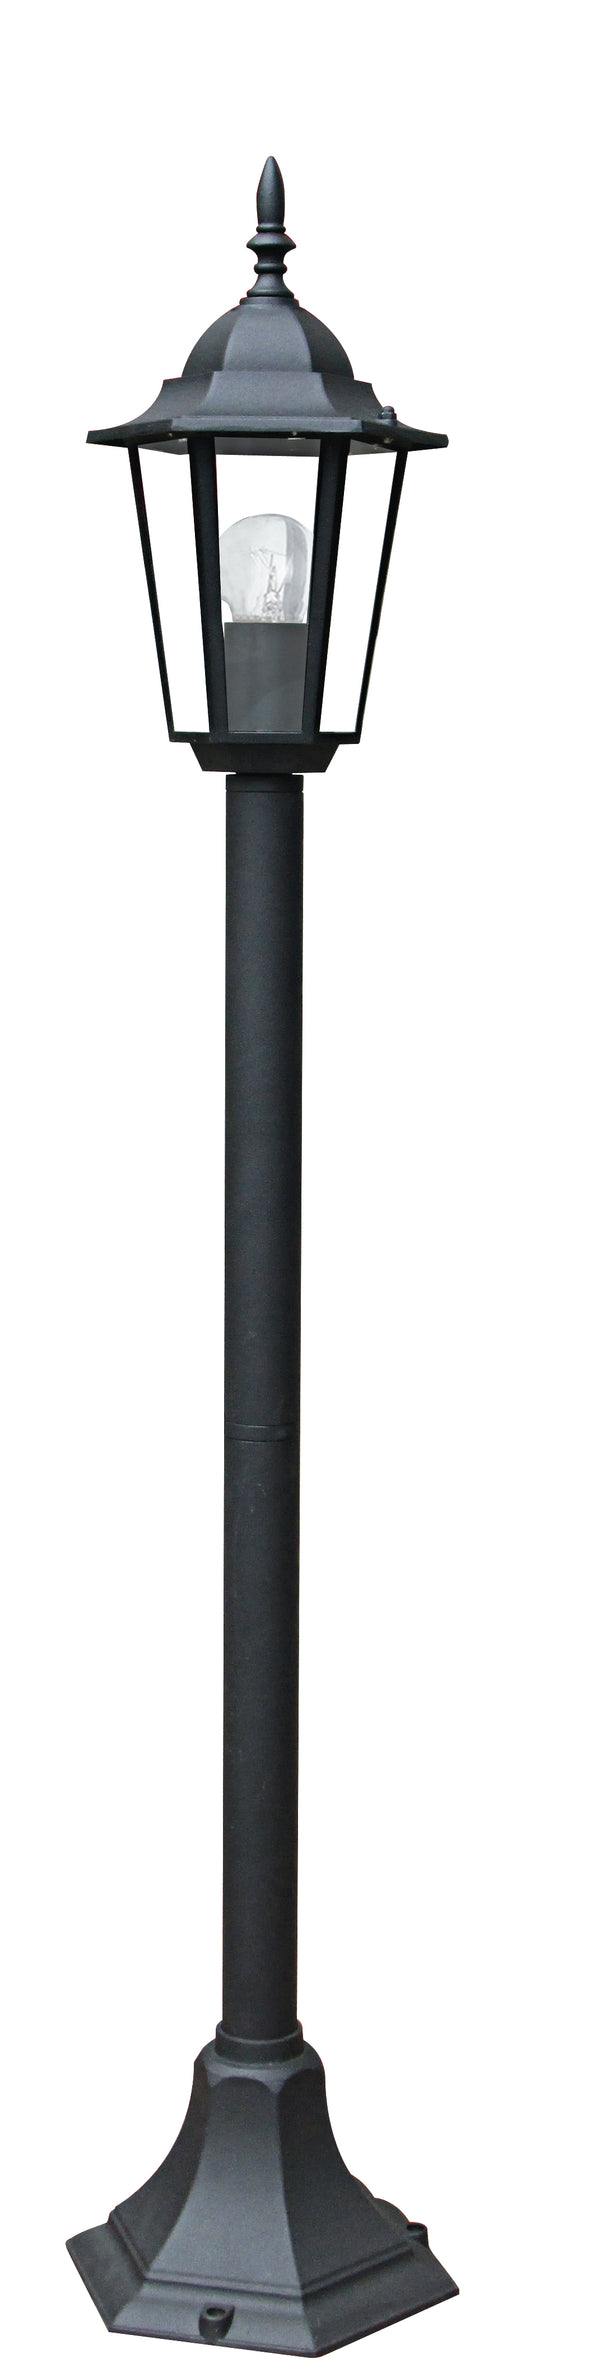 Externer Mast Schwarzer wasserdichter Diffusor aus Aluminium E27 Intec LANT-MILANO/P1 prezzo